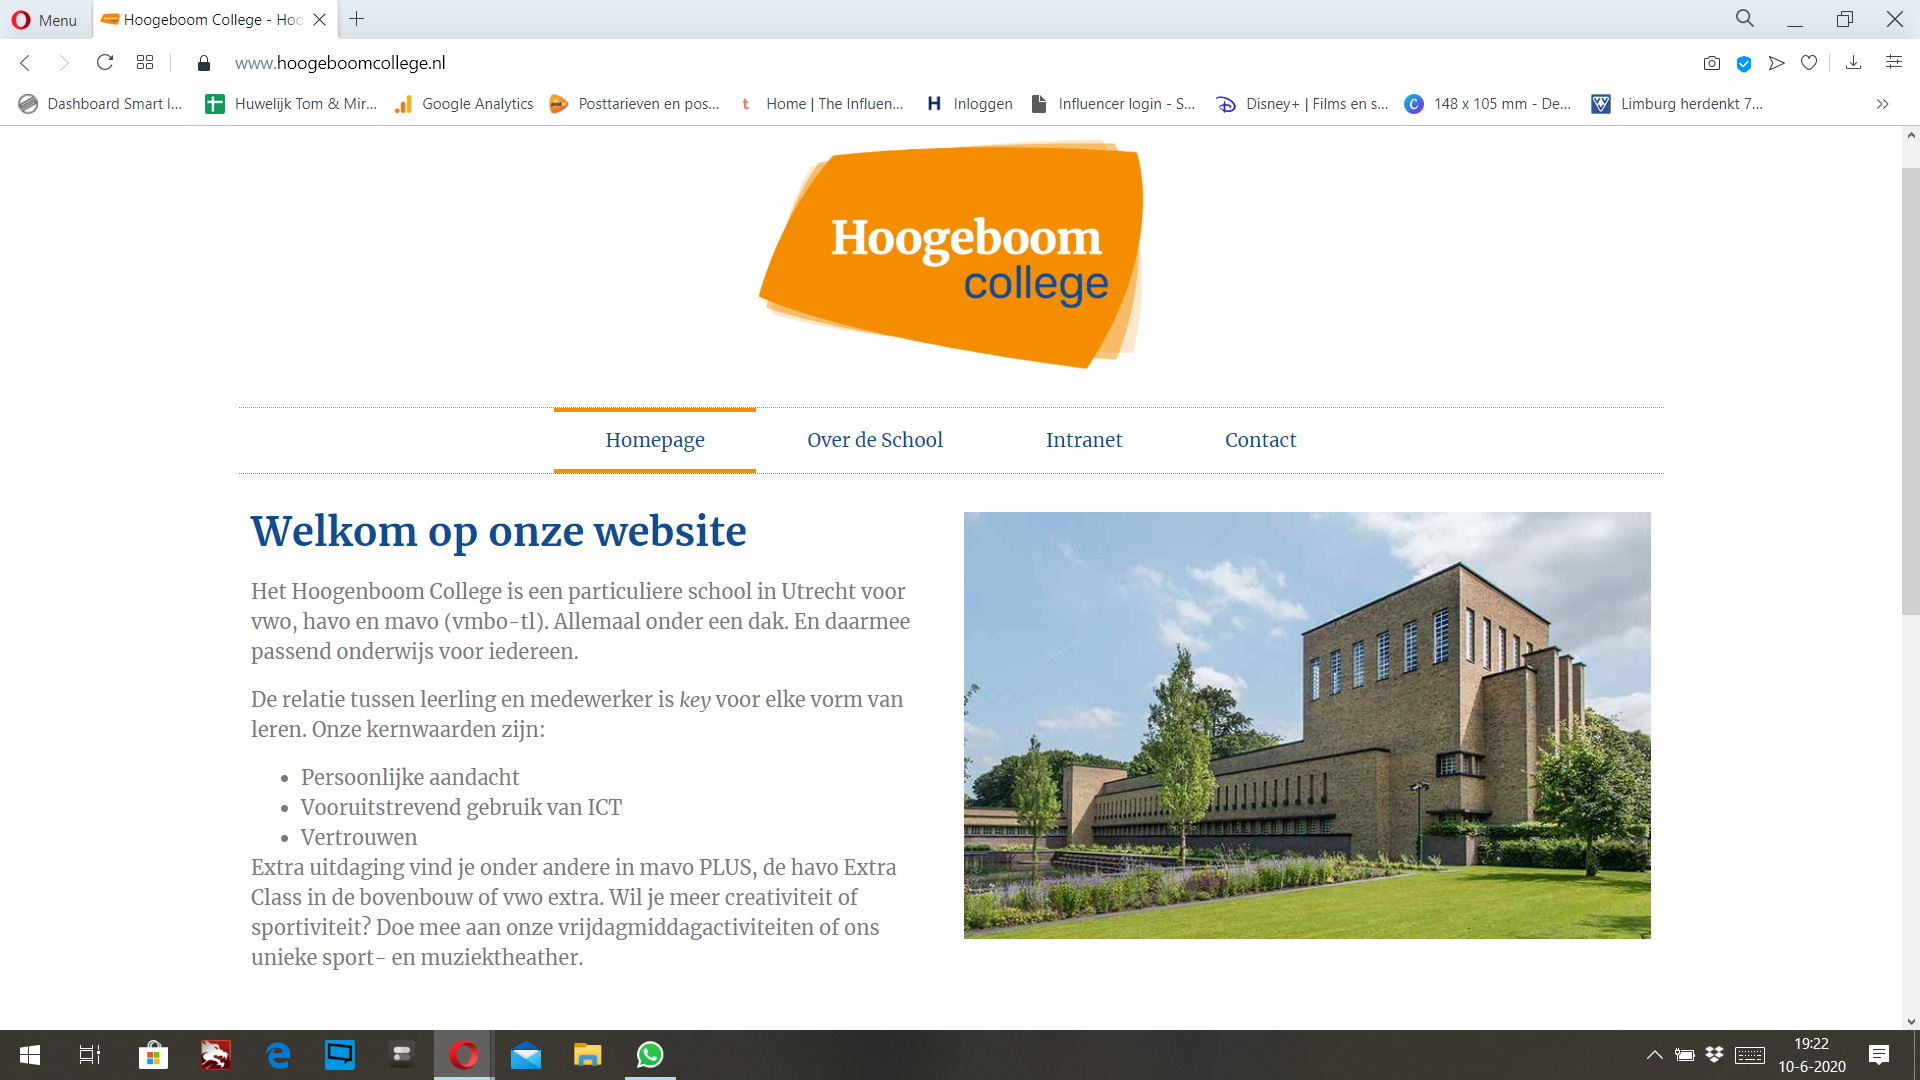 Hoogeboom college